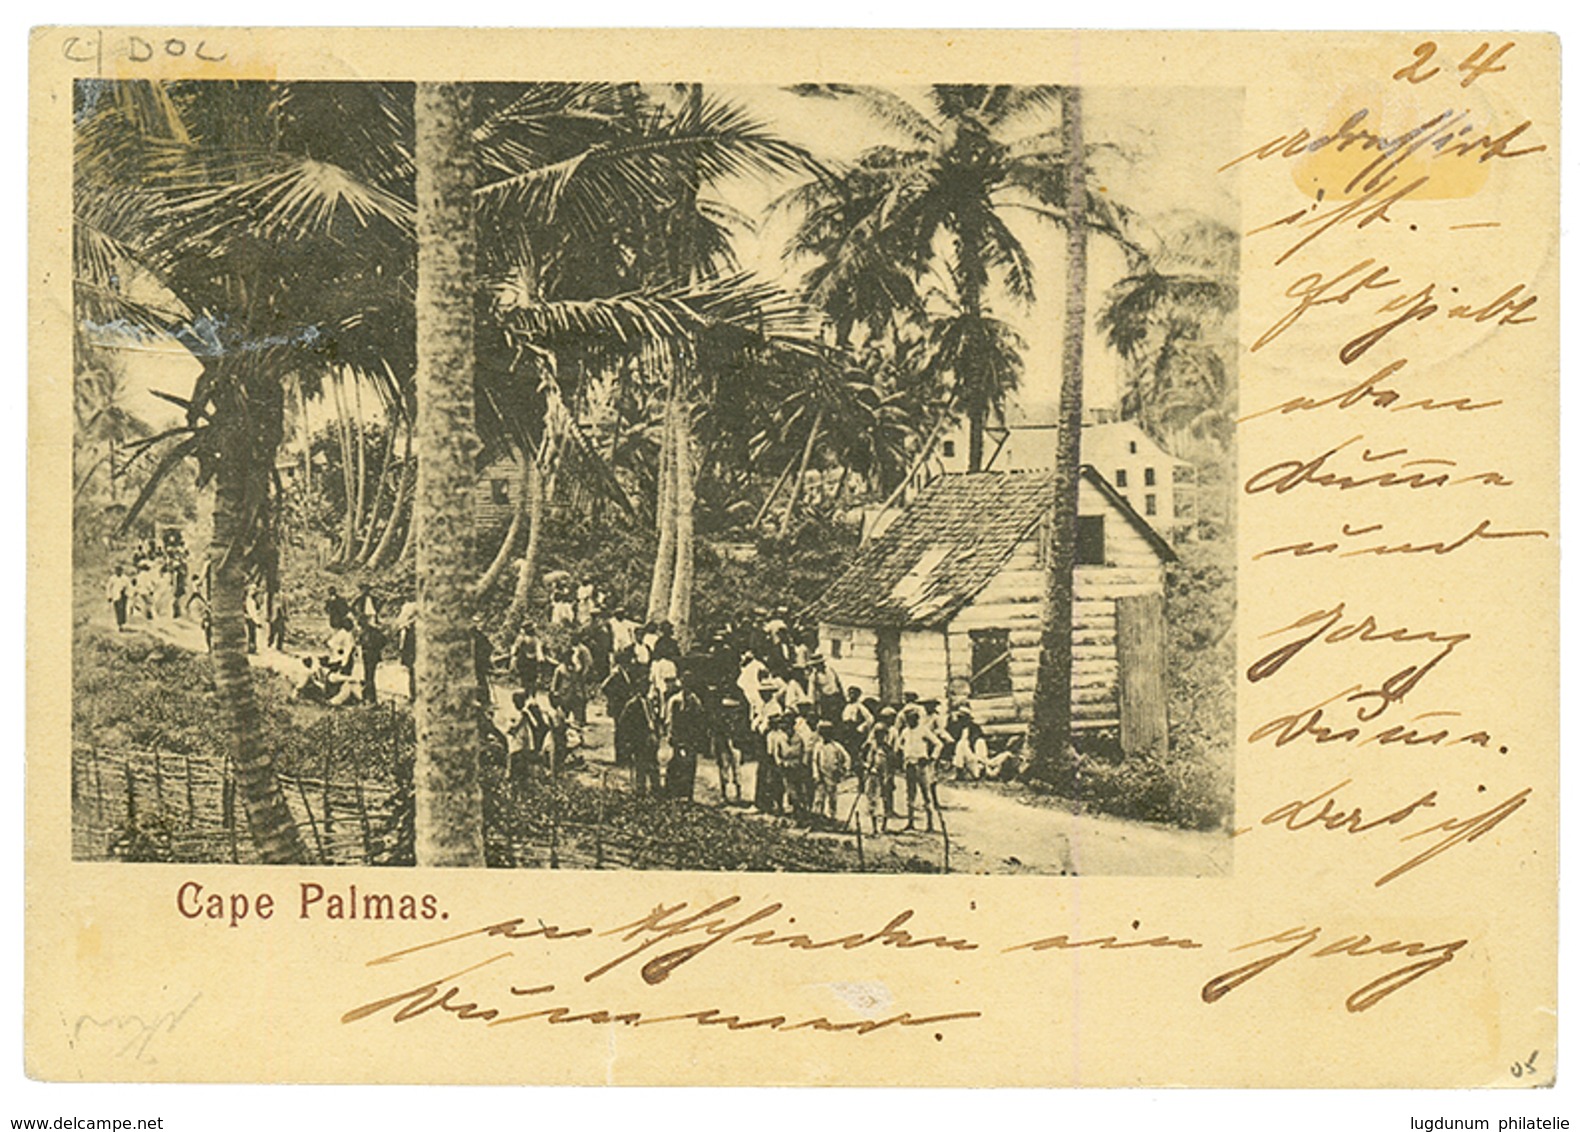 LIBERIA : 1900 LIBERIA 1c + 2c + GERMAN CAMEROONS 3pf + 25pf Canc. DEUTSCHE SEAPOST WESTAFRIKA On Card From CAPE PALMAS  - Liberia